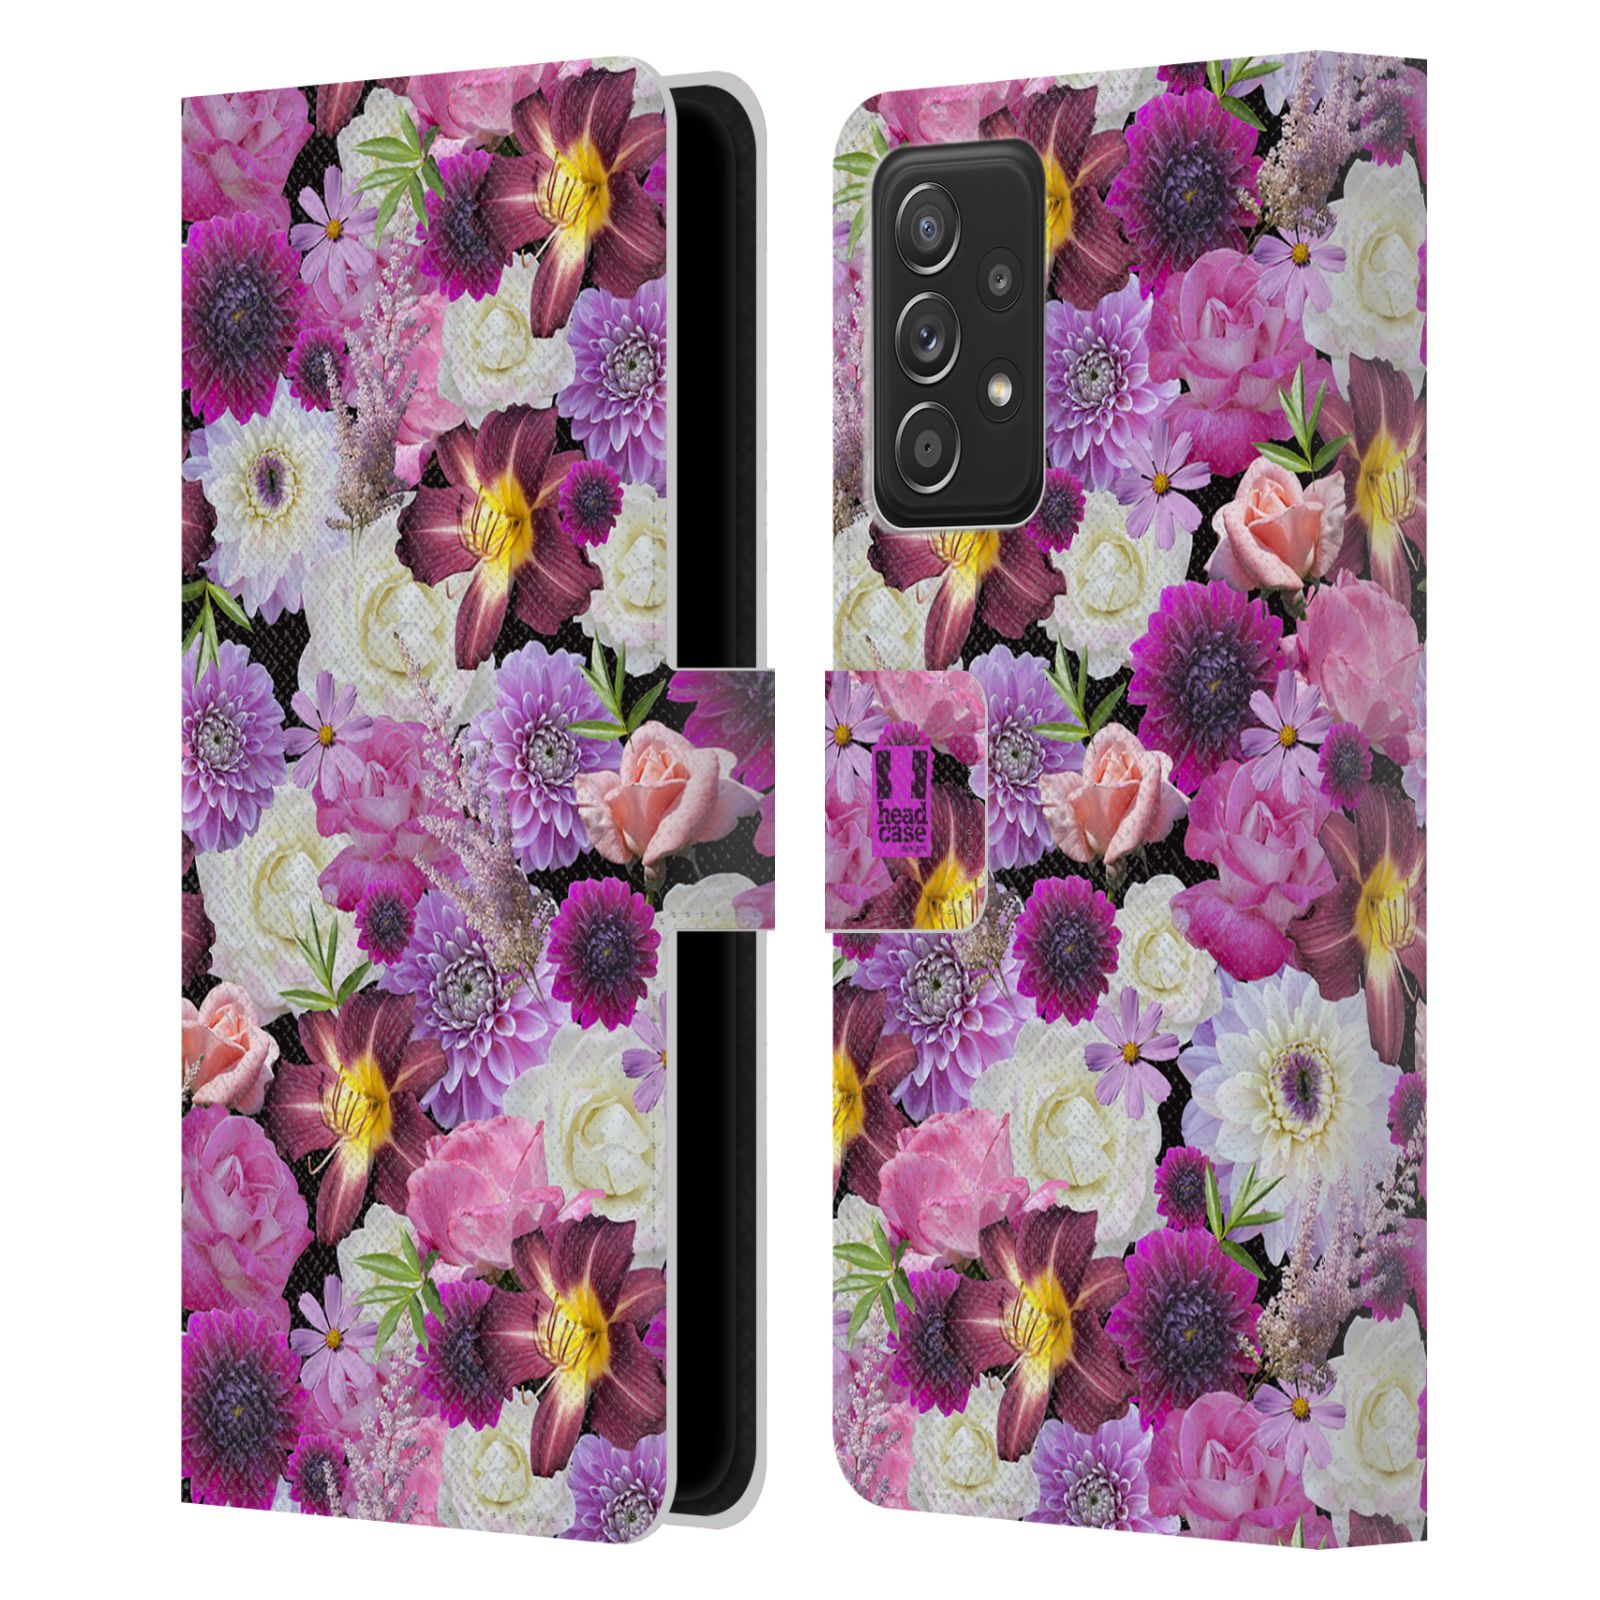 Pouzdro HEAD CASE na mobil Samsung Galaxy A52 / A52 5G / A52s 5G květy foto fialová a bílá